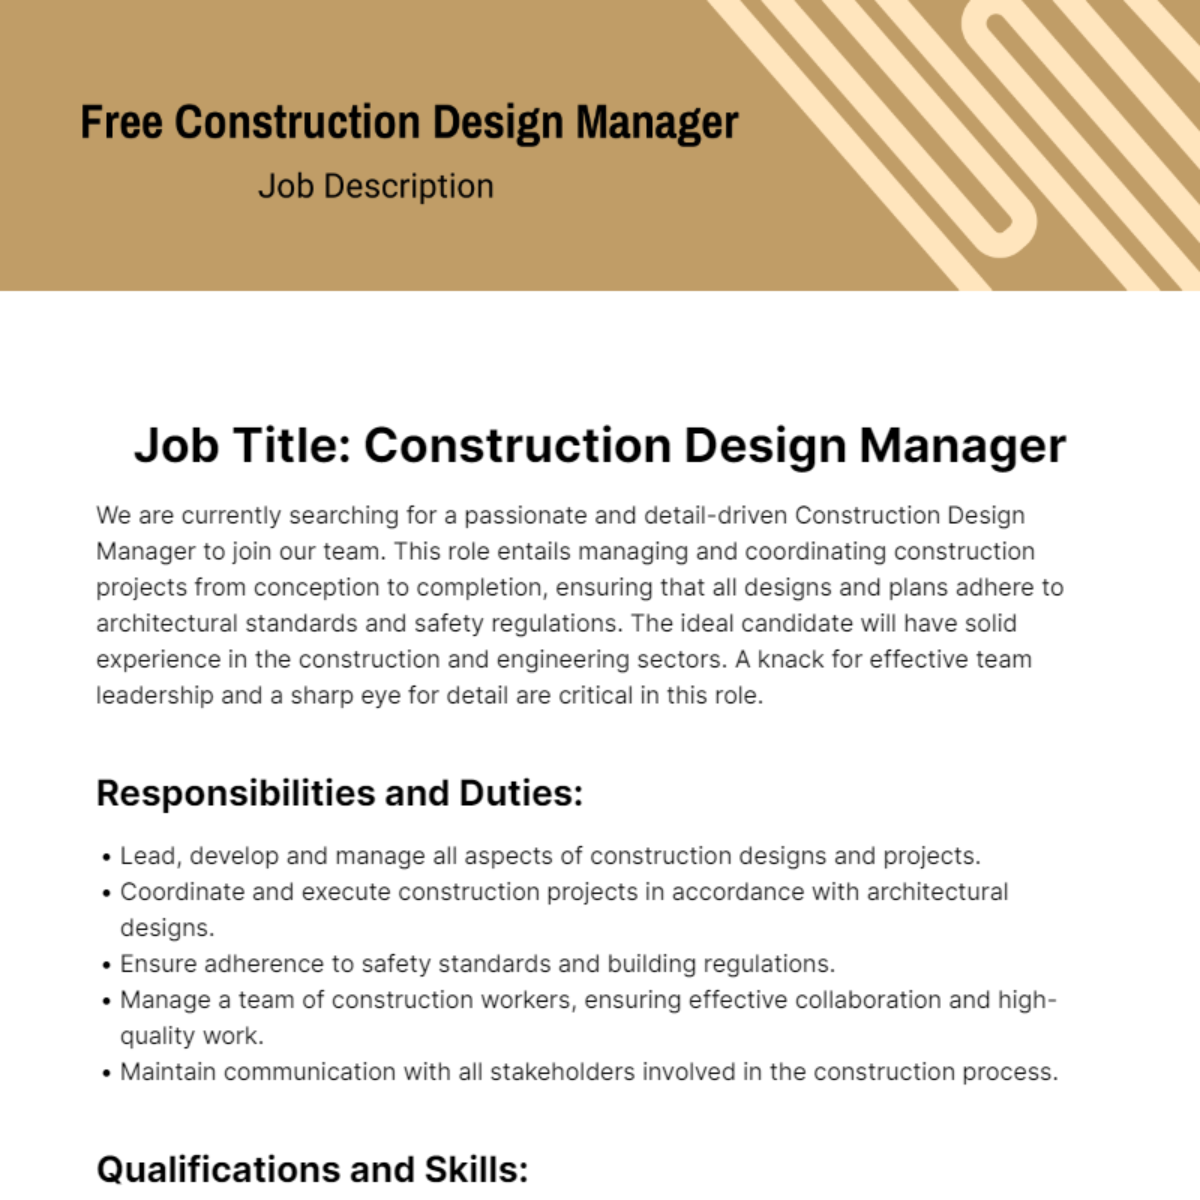 Free Construction Design Manager Job Description Template